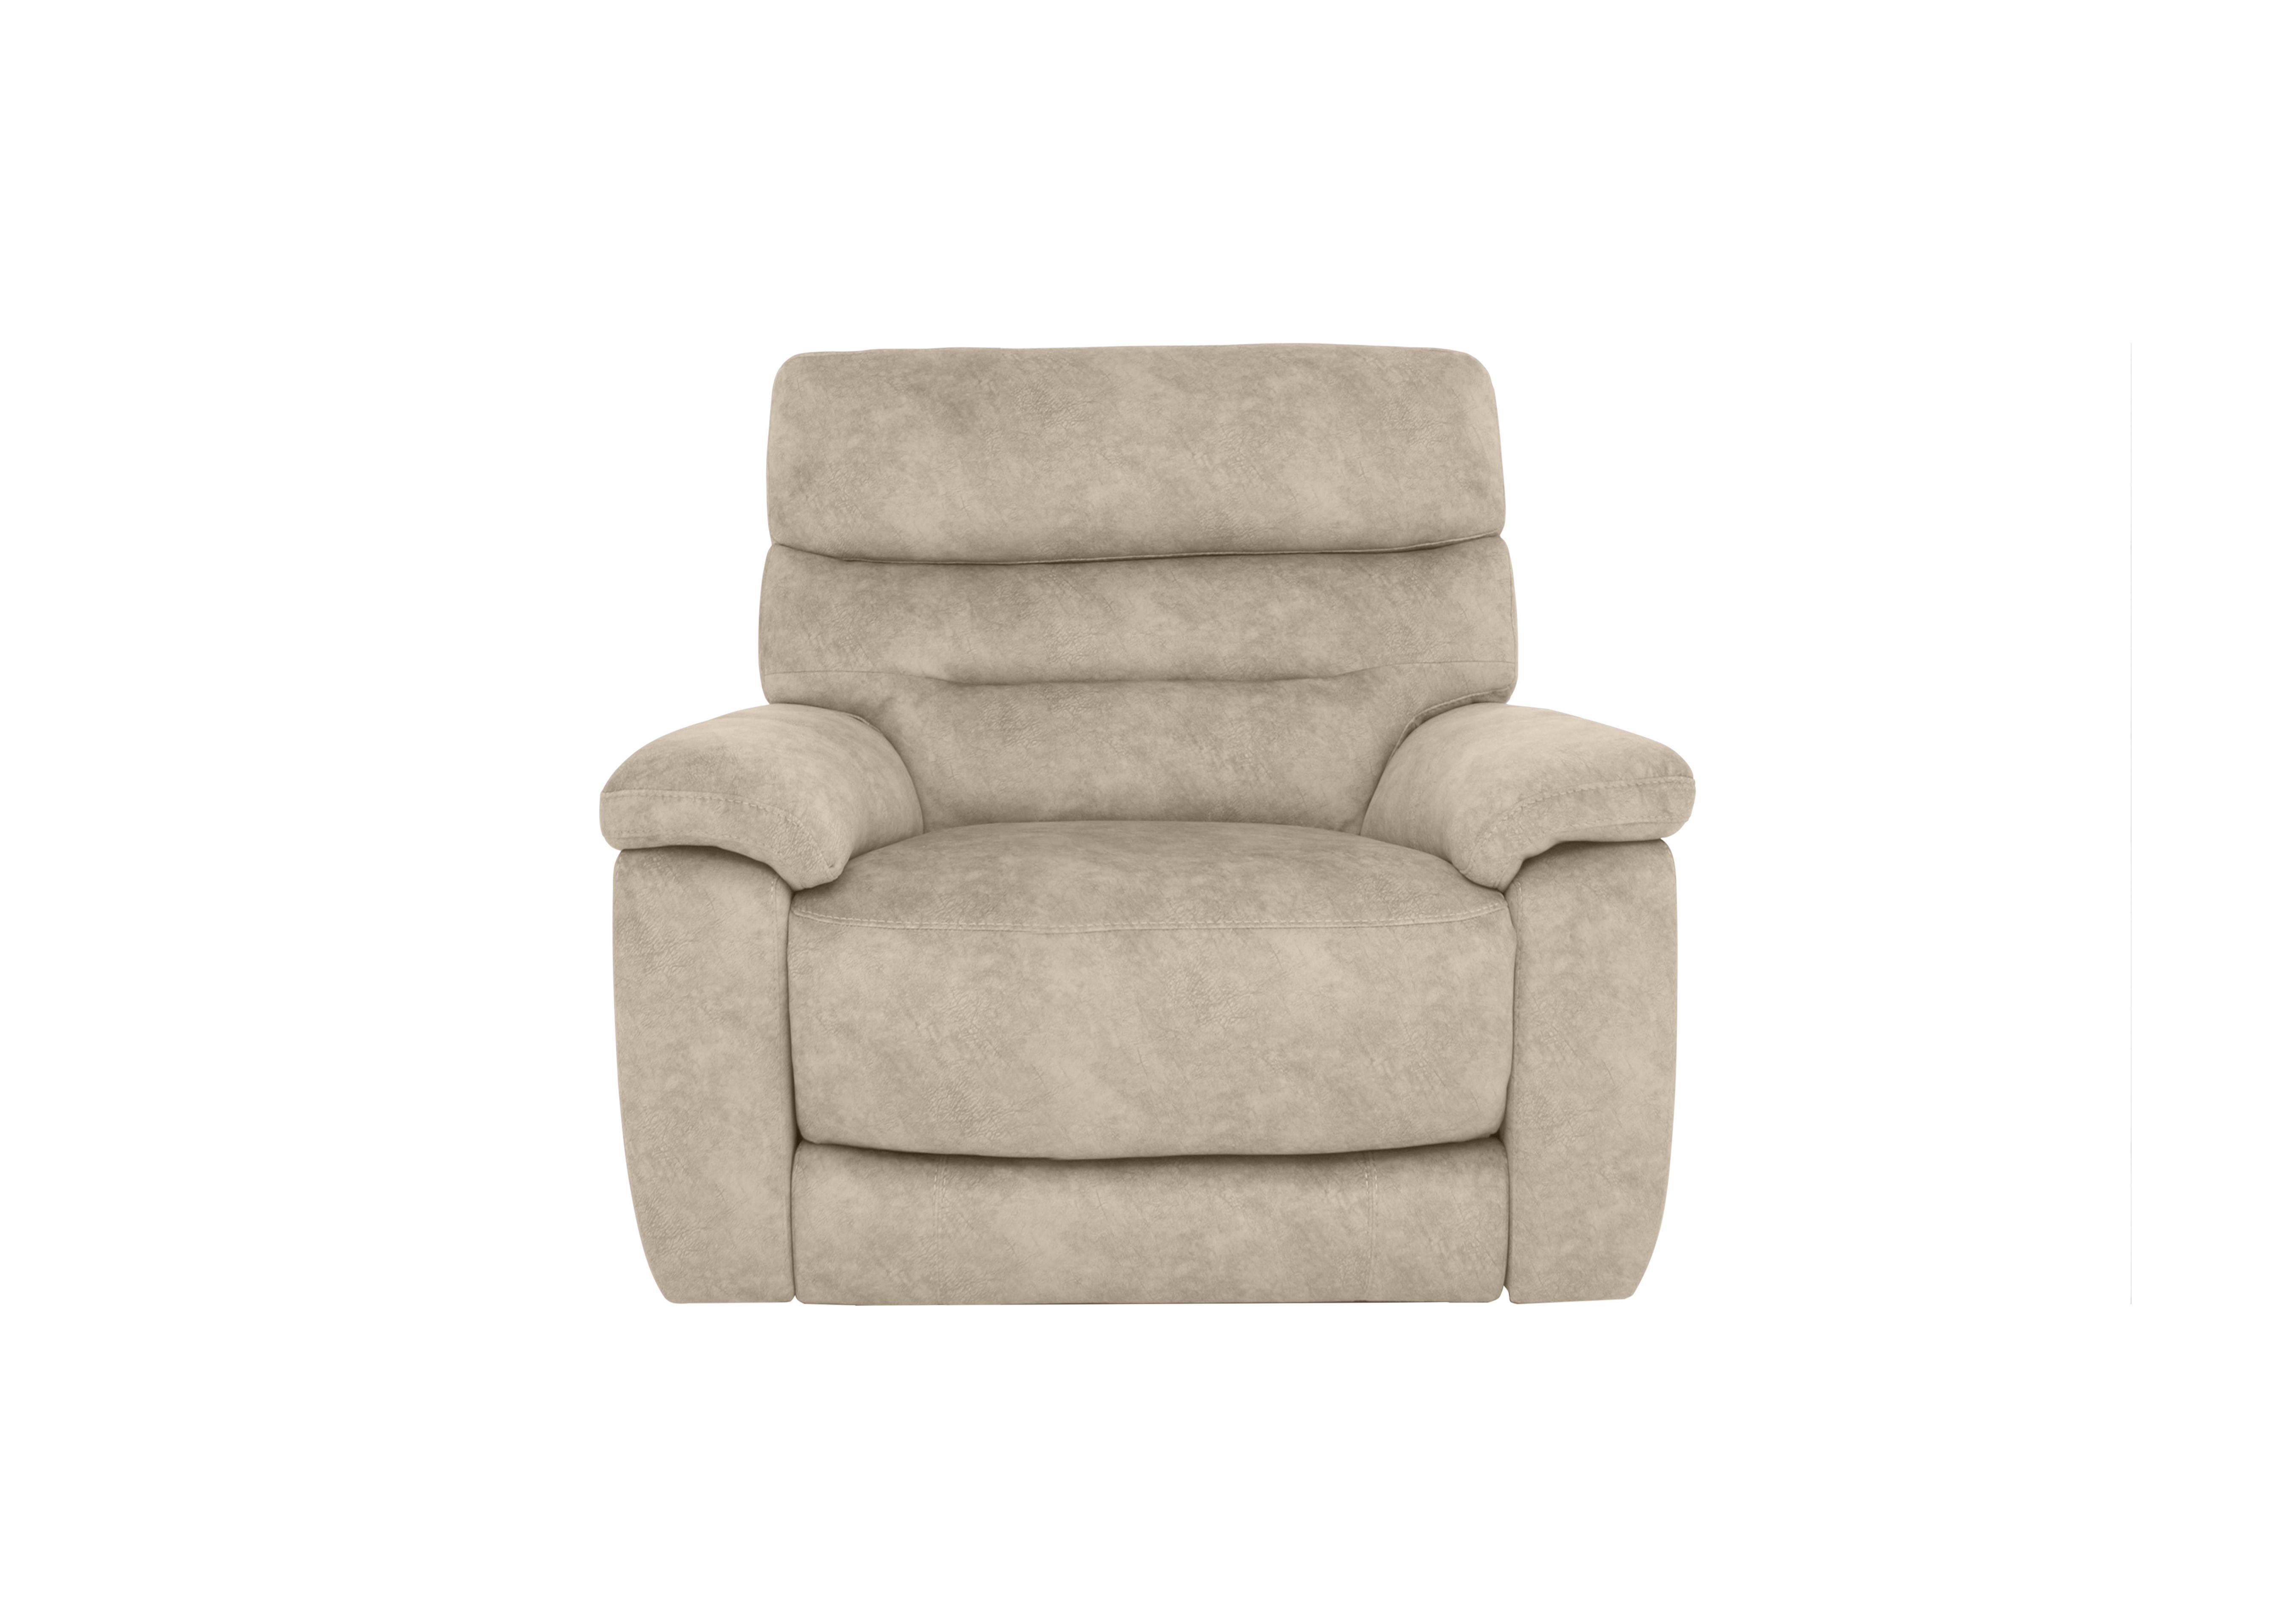 Nimbus Fabric Chair in Bfa-Bnn-R26 Cream on Furniture Village